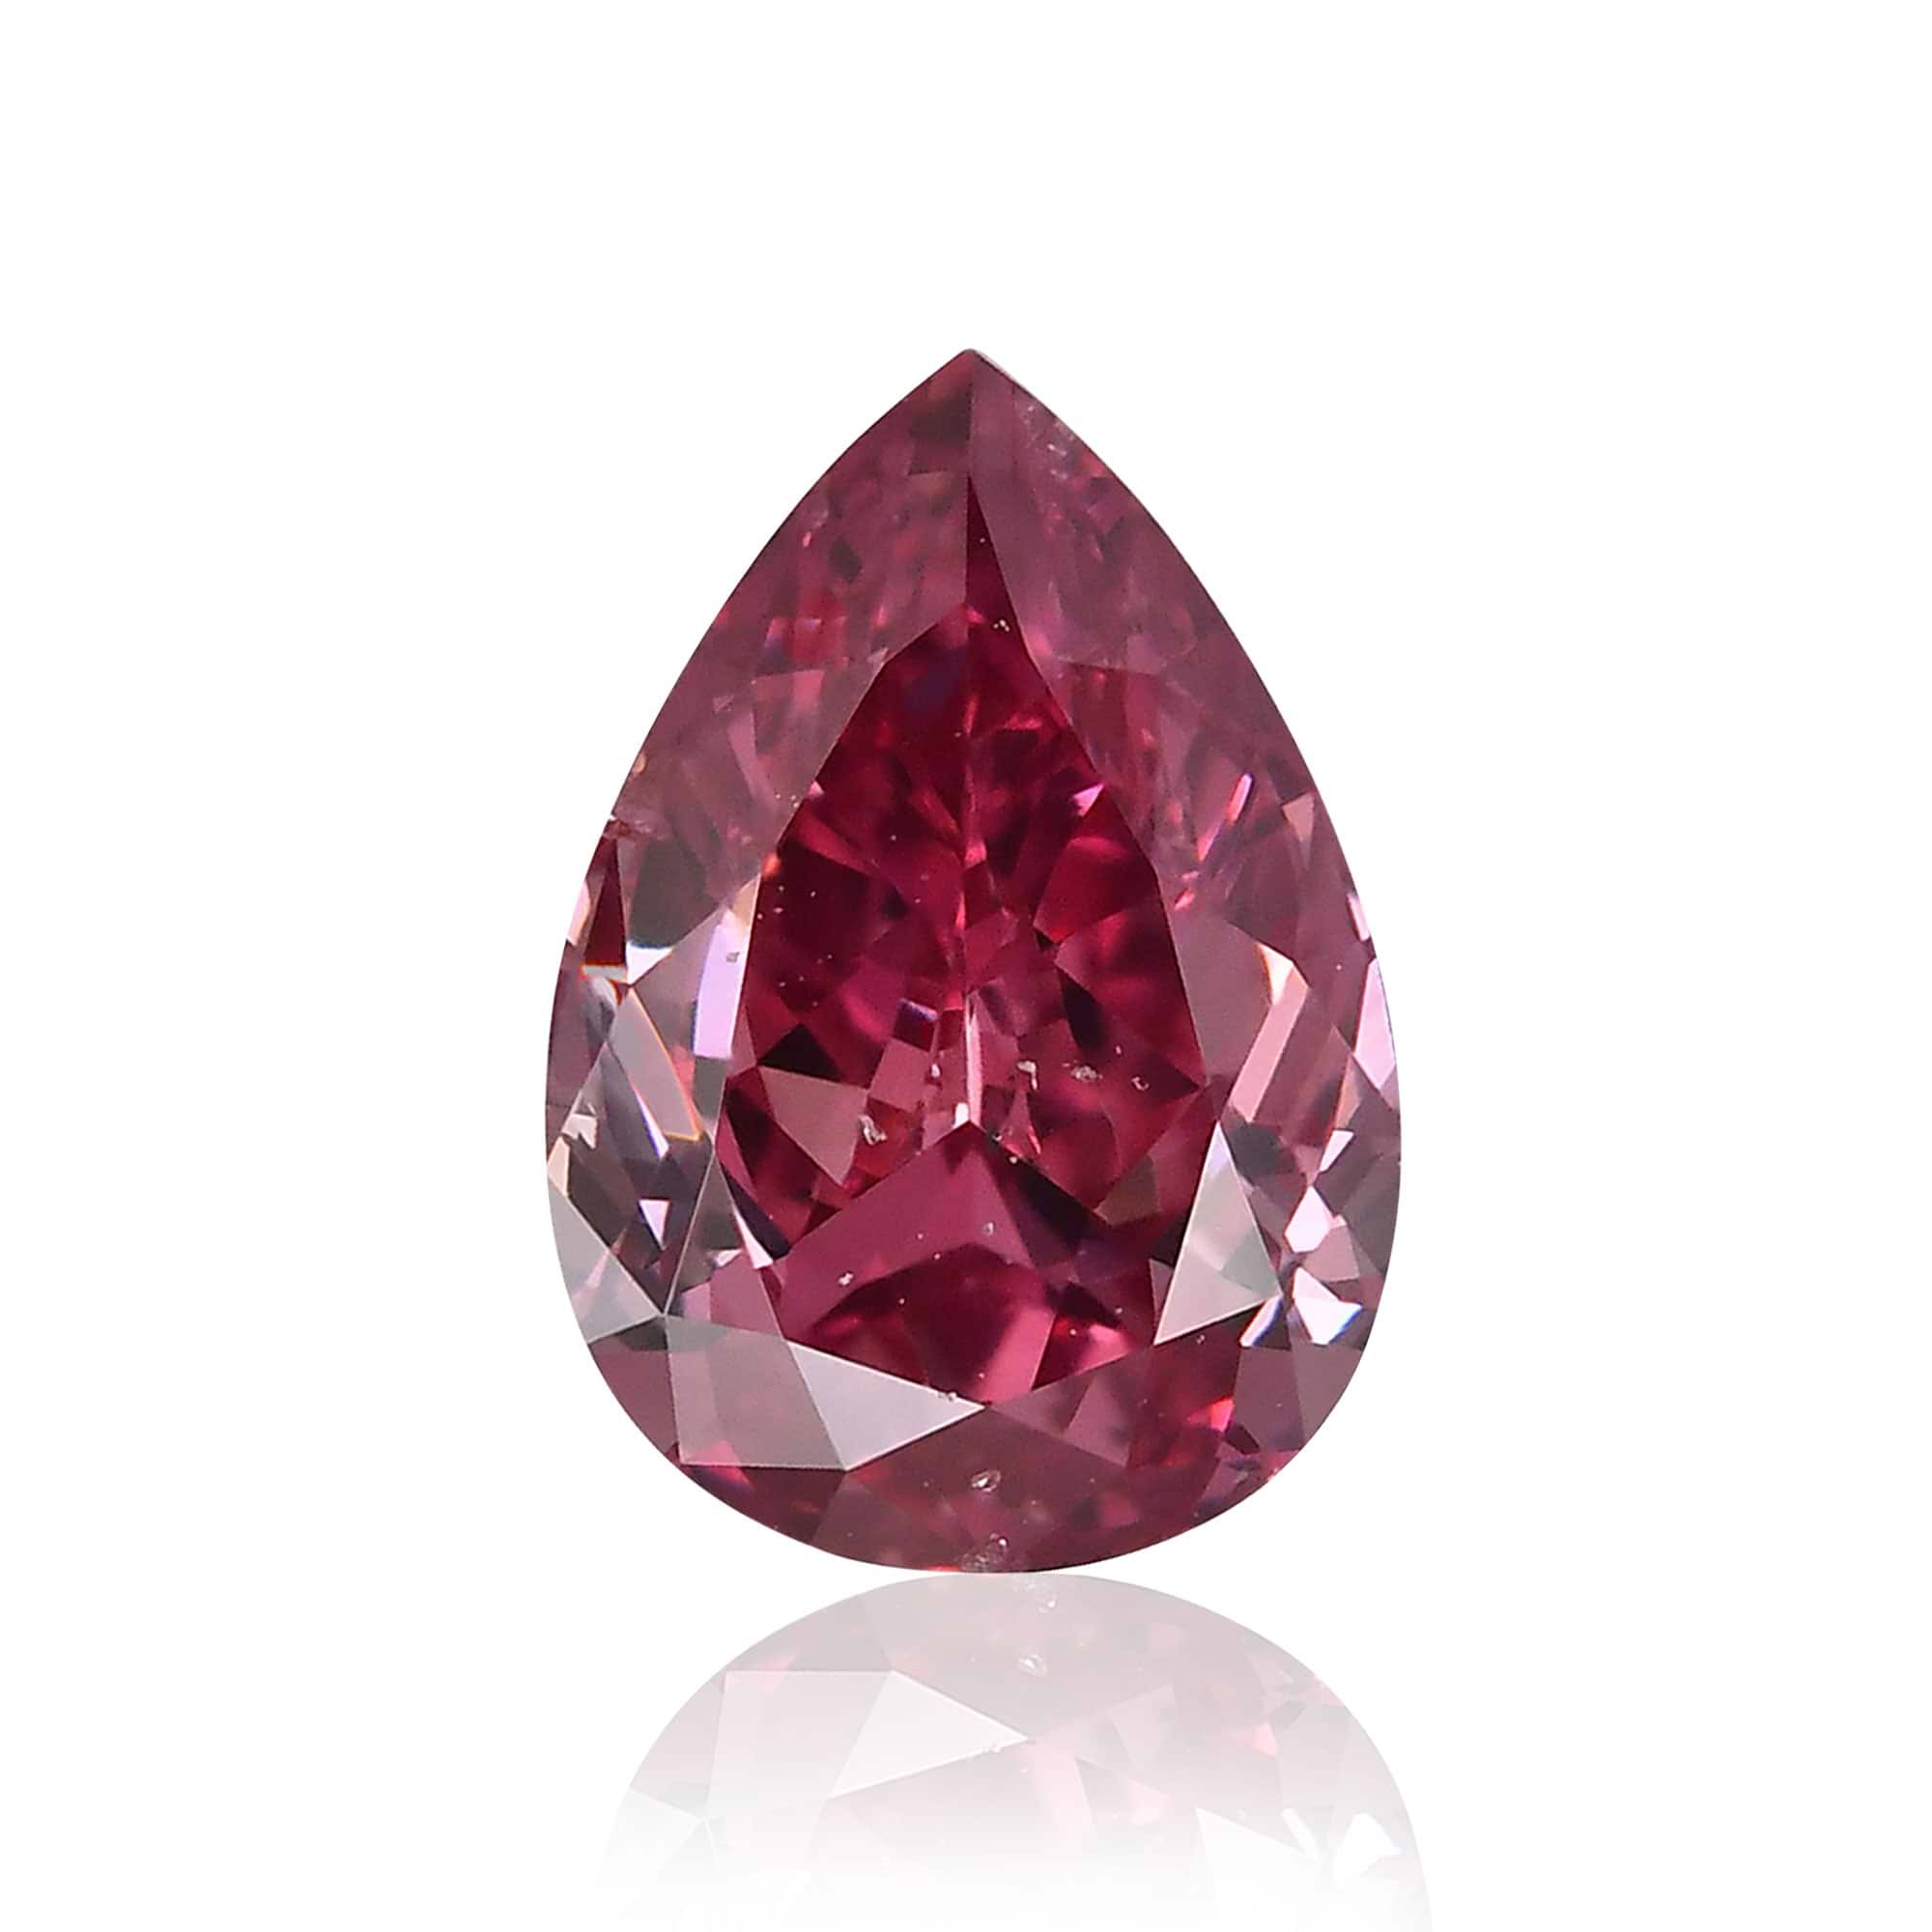 LEIBISH 0.70 carat, Fancy Purplish Red Diamond, Pear Shape, SI1 Clarity, GIA